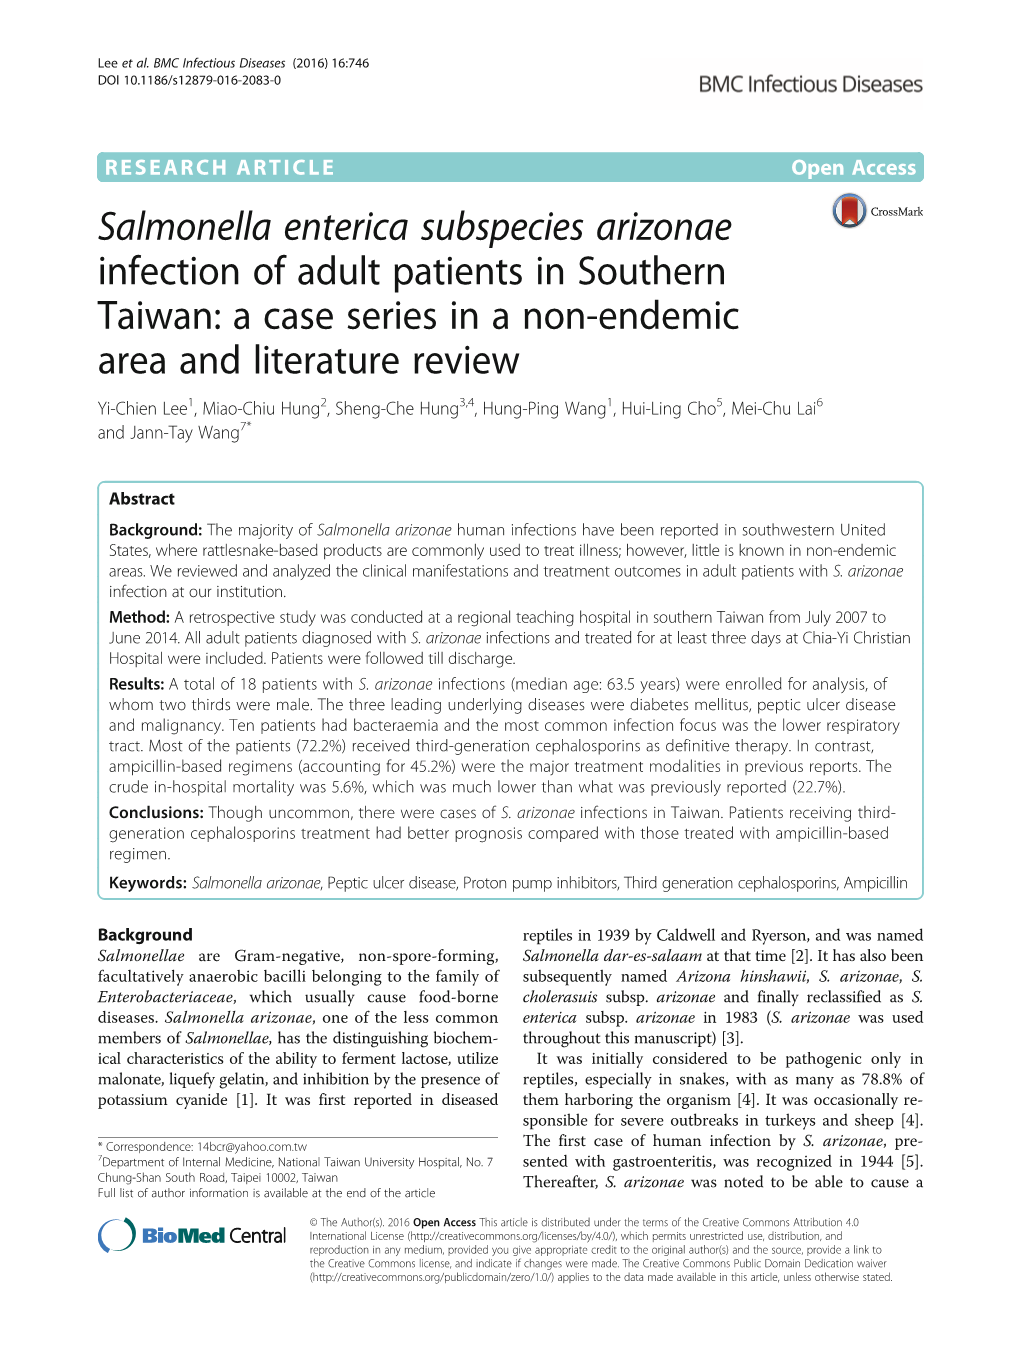 Salmonella Enterica Subspecies Arizonae Infection of Adult Patients